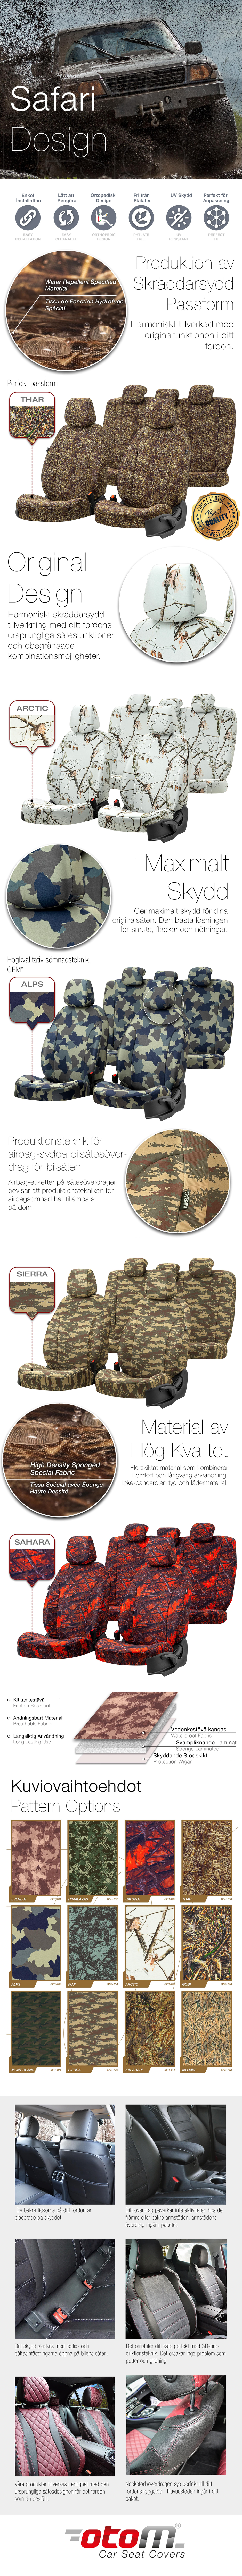 Safari design seat covers